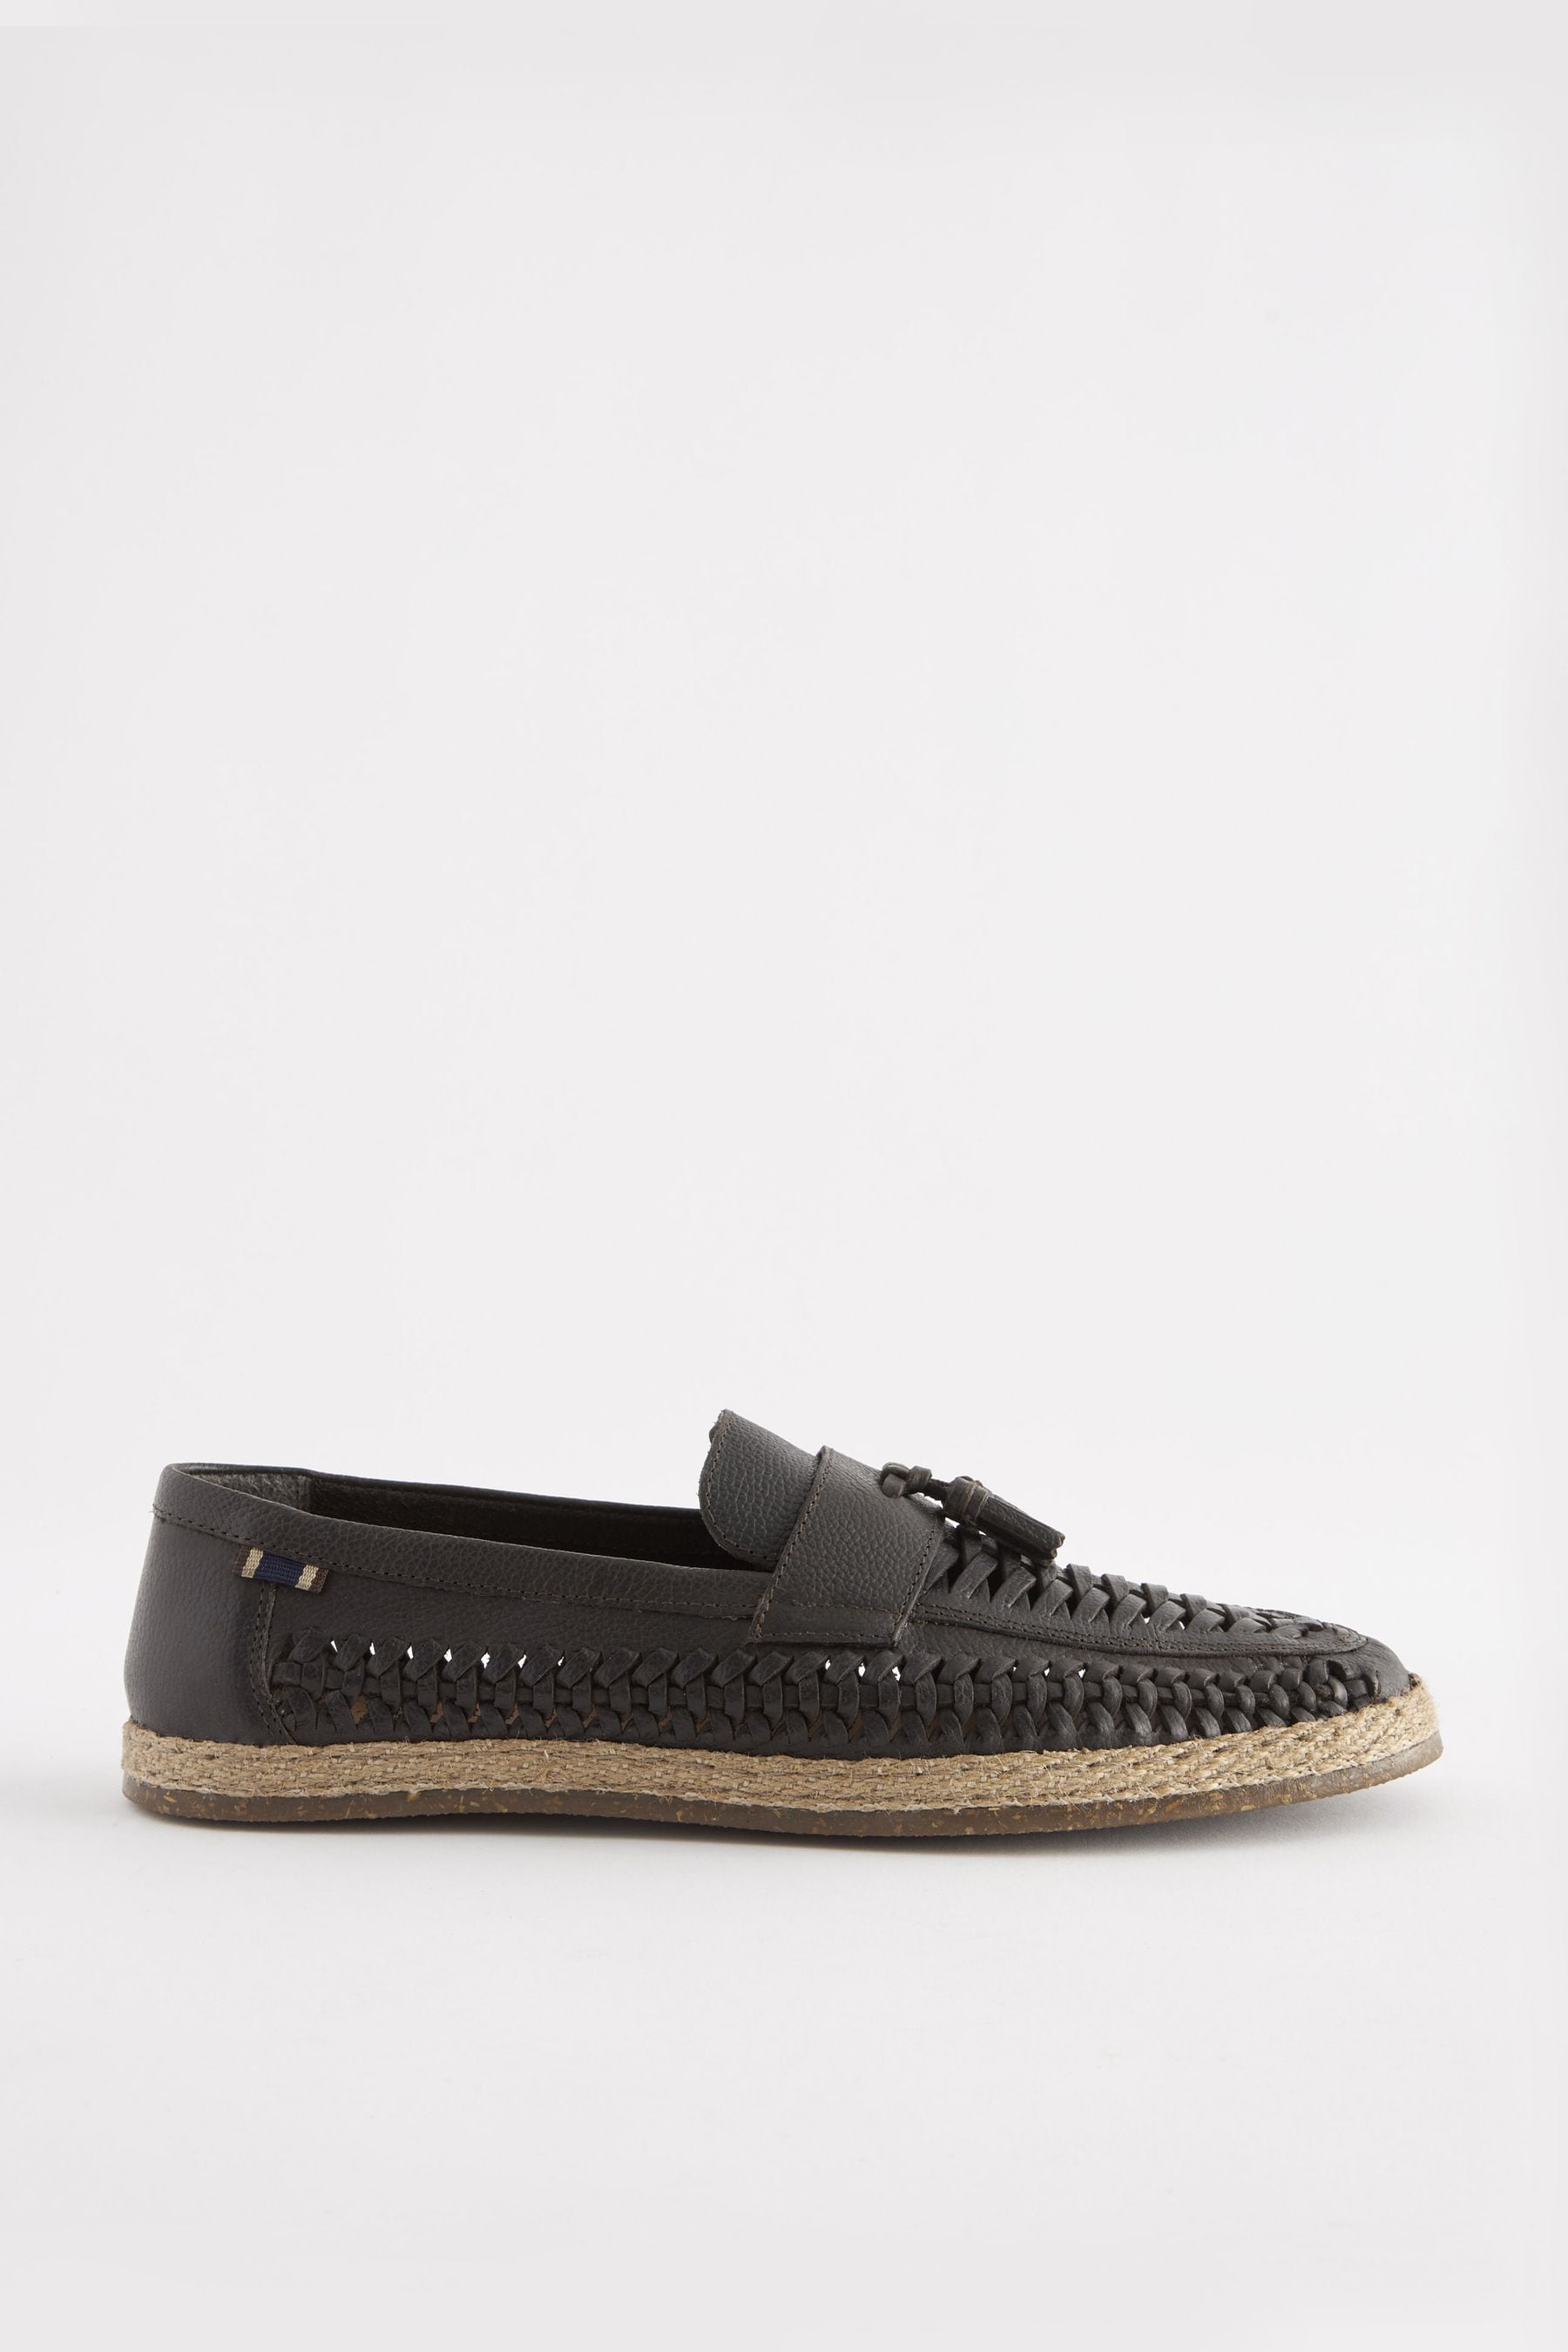 Buy Dark Brown Weave Tassel Loafers from the Next UK online shop